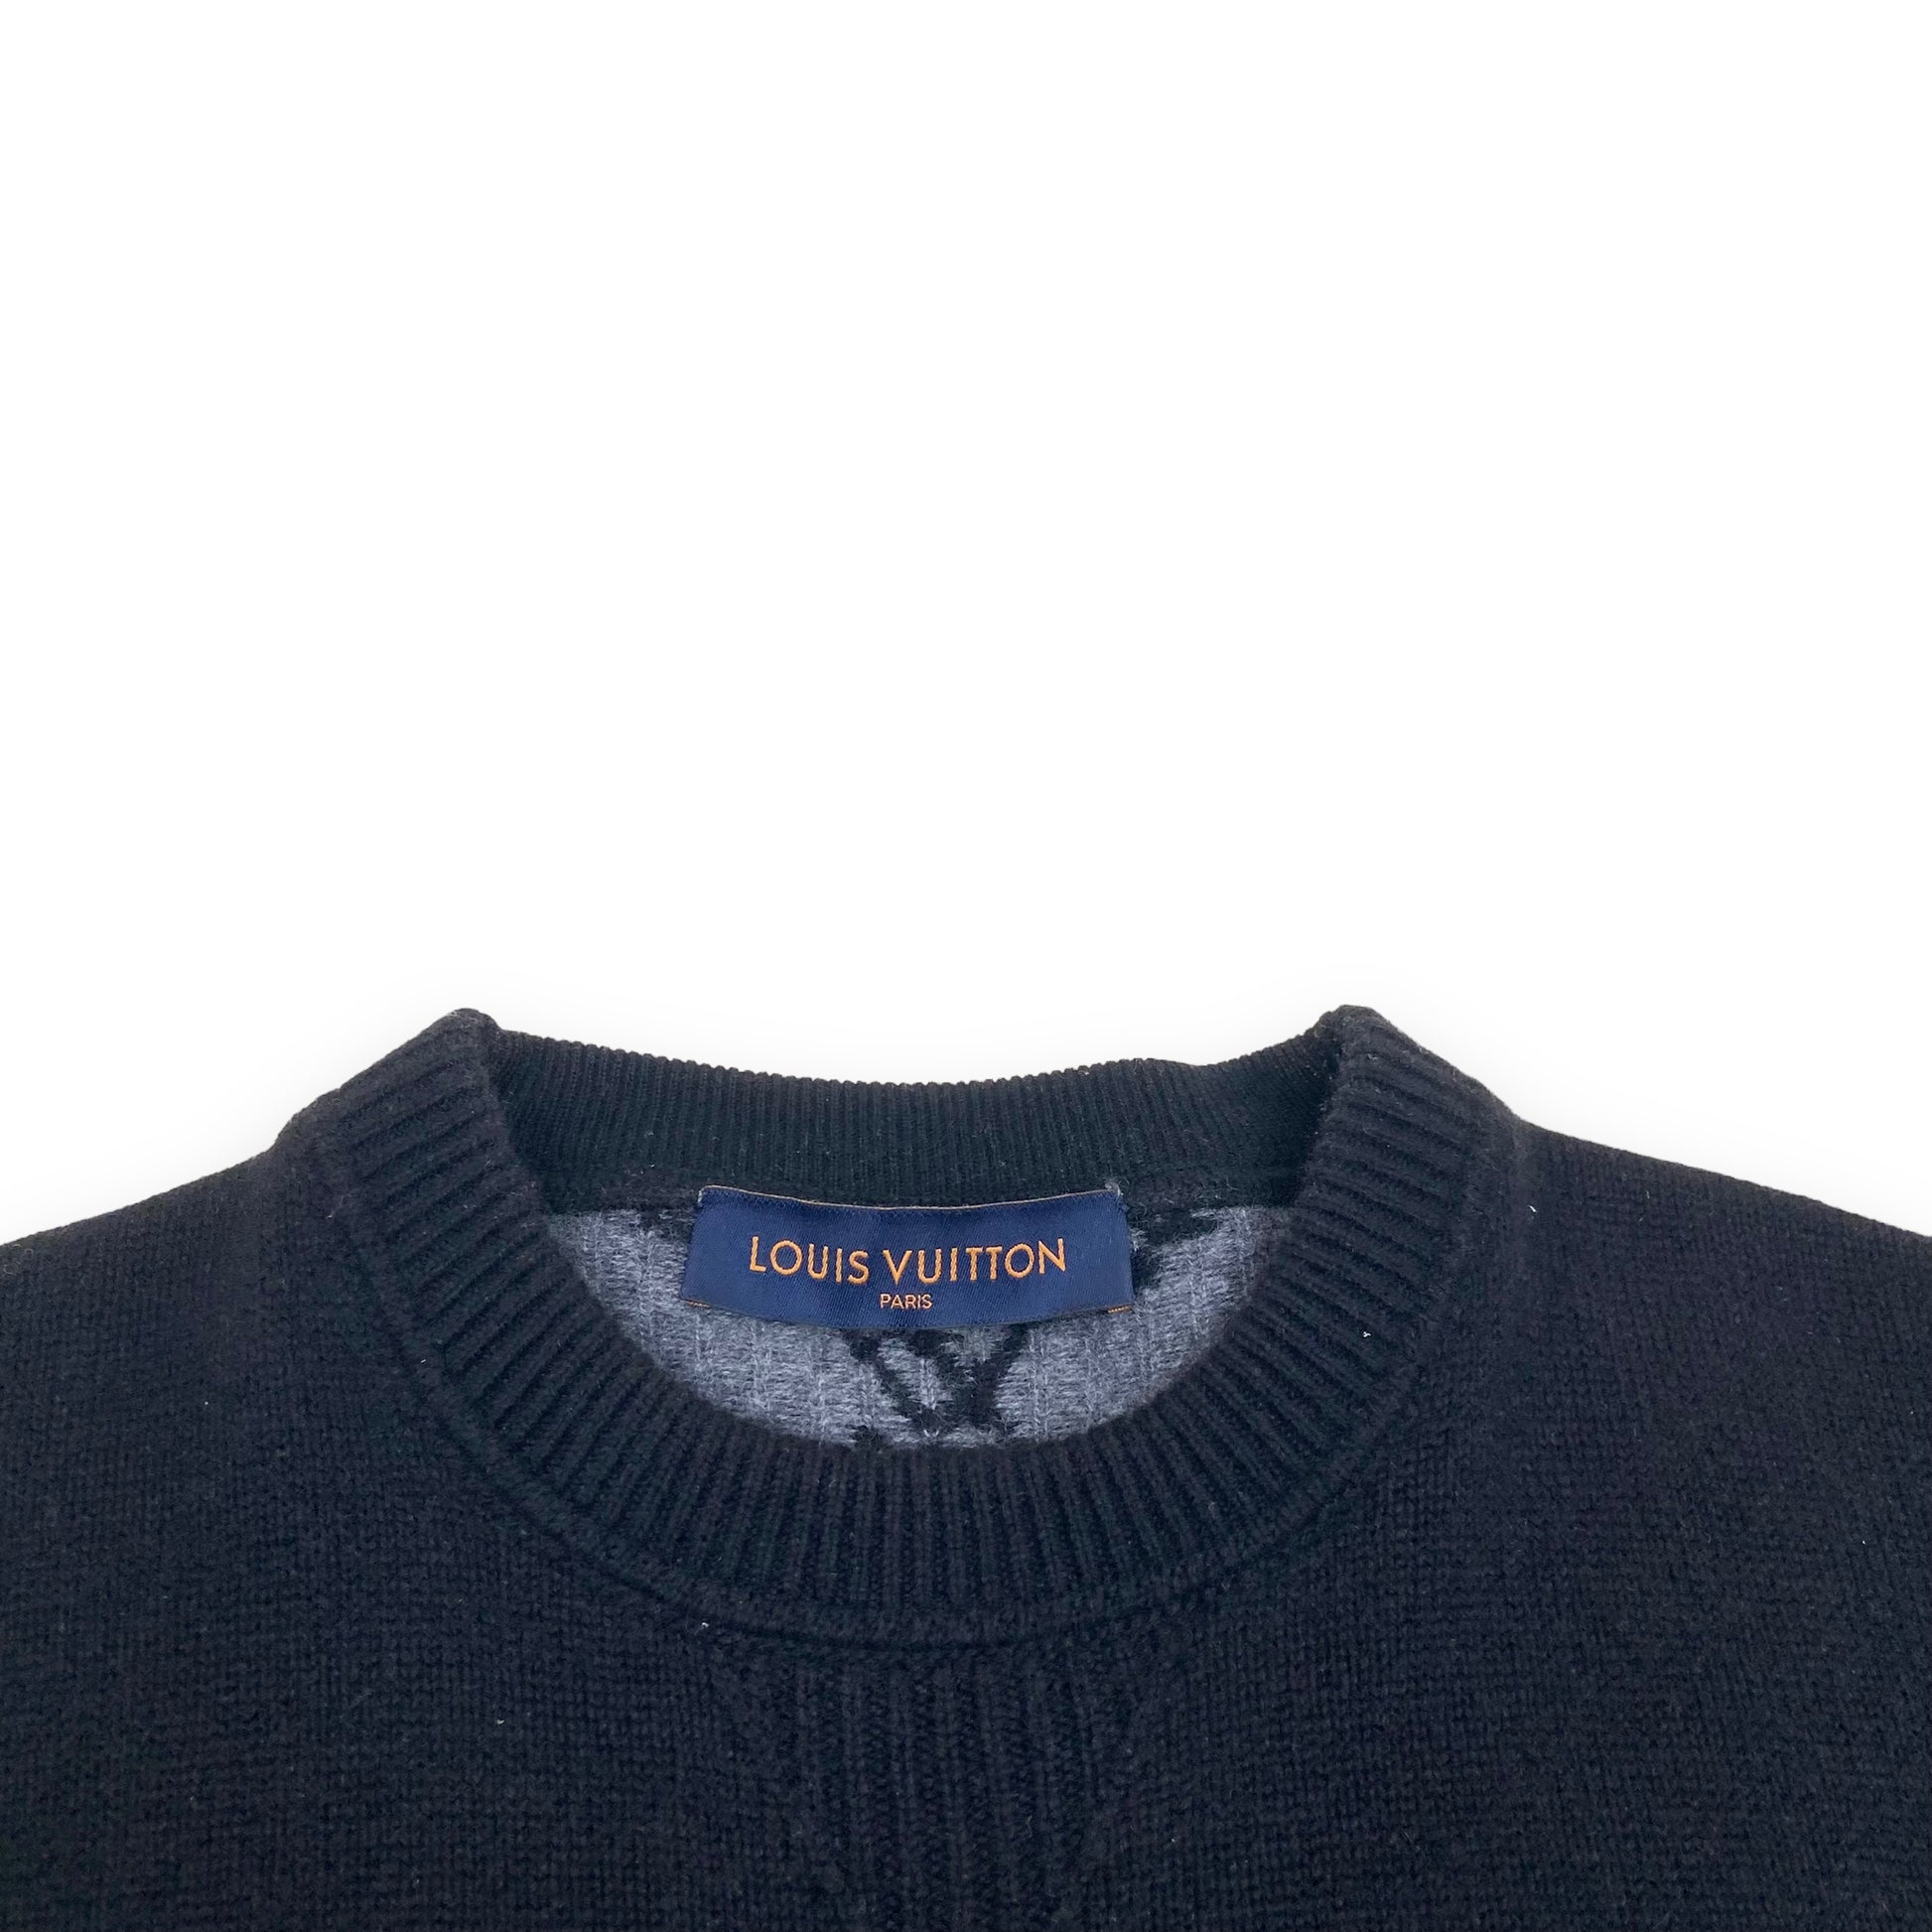 louis vuitton black sweater